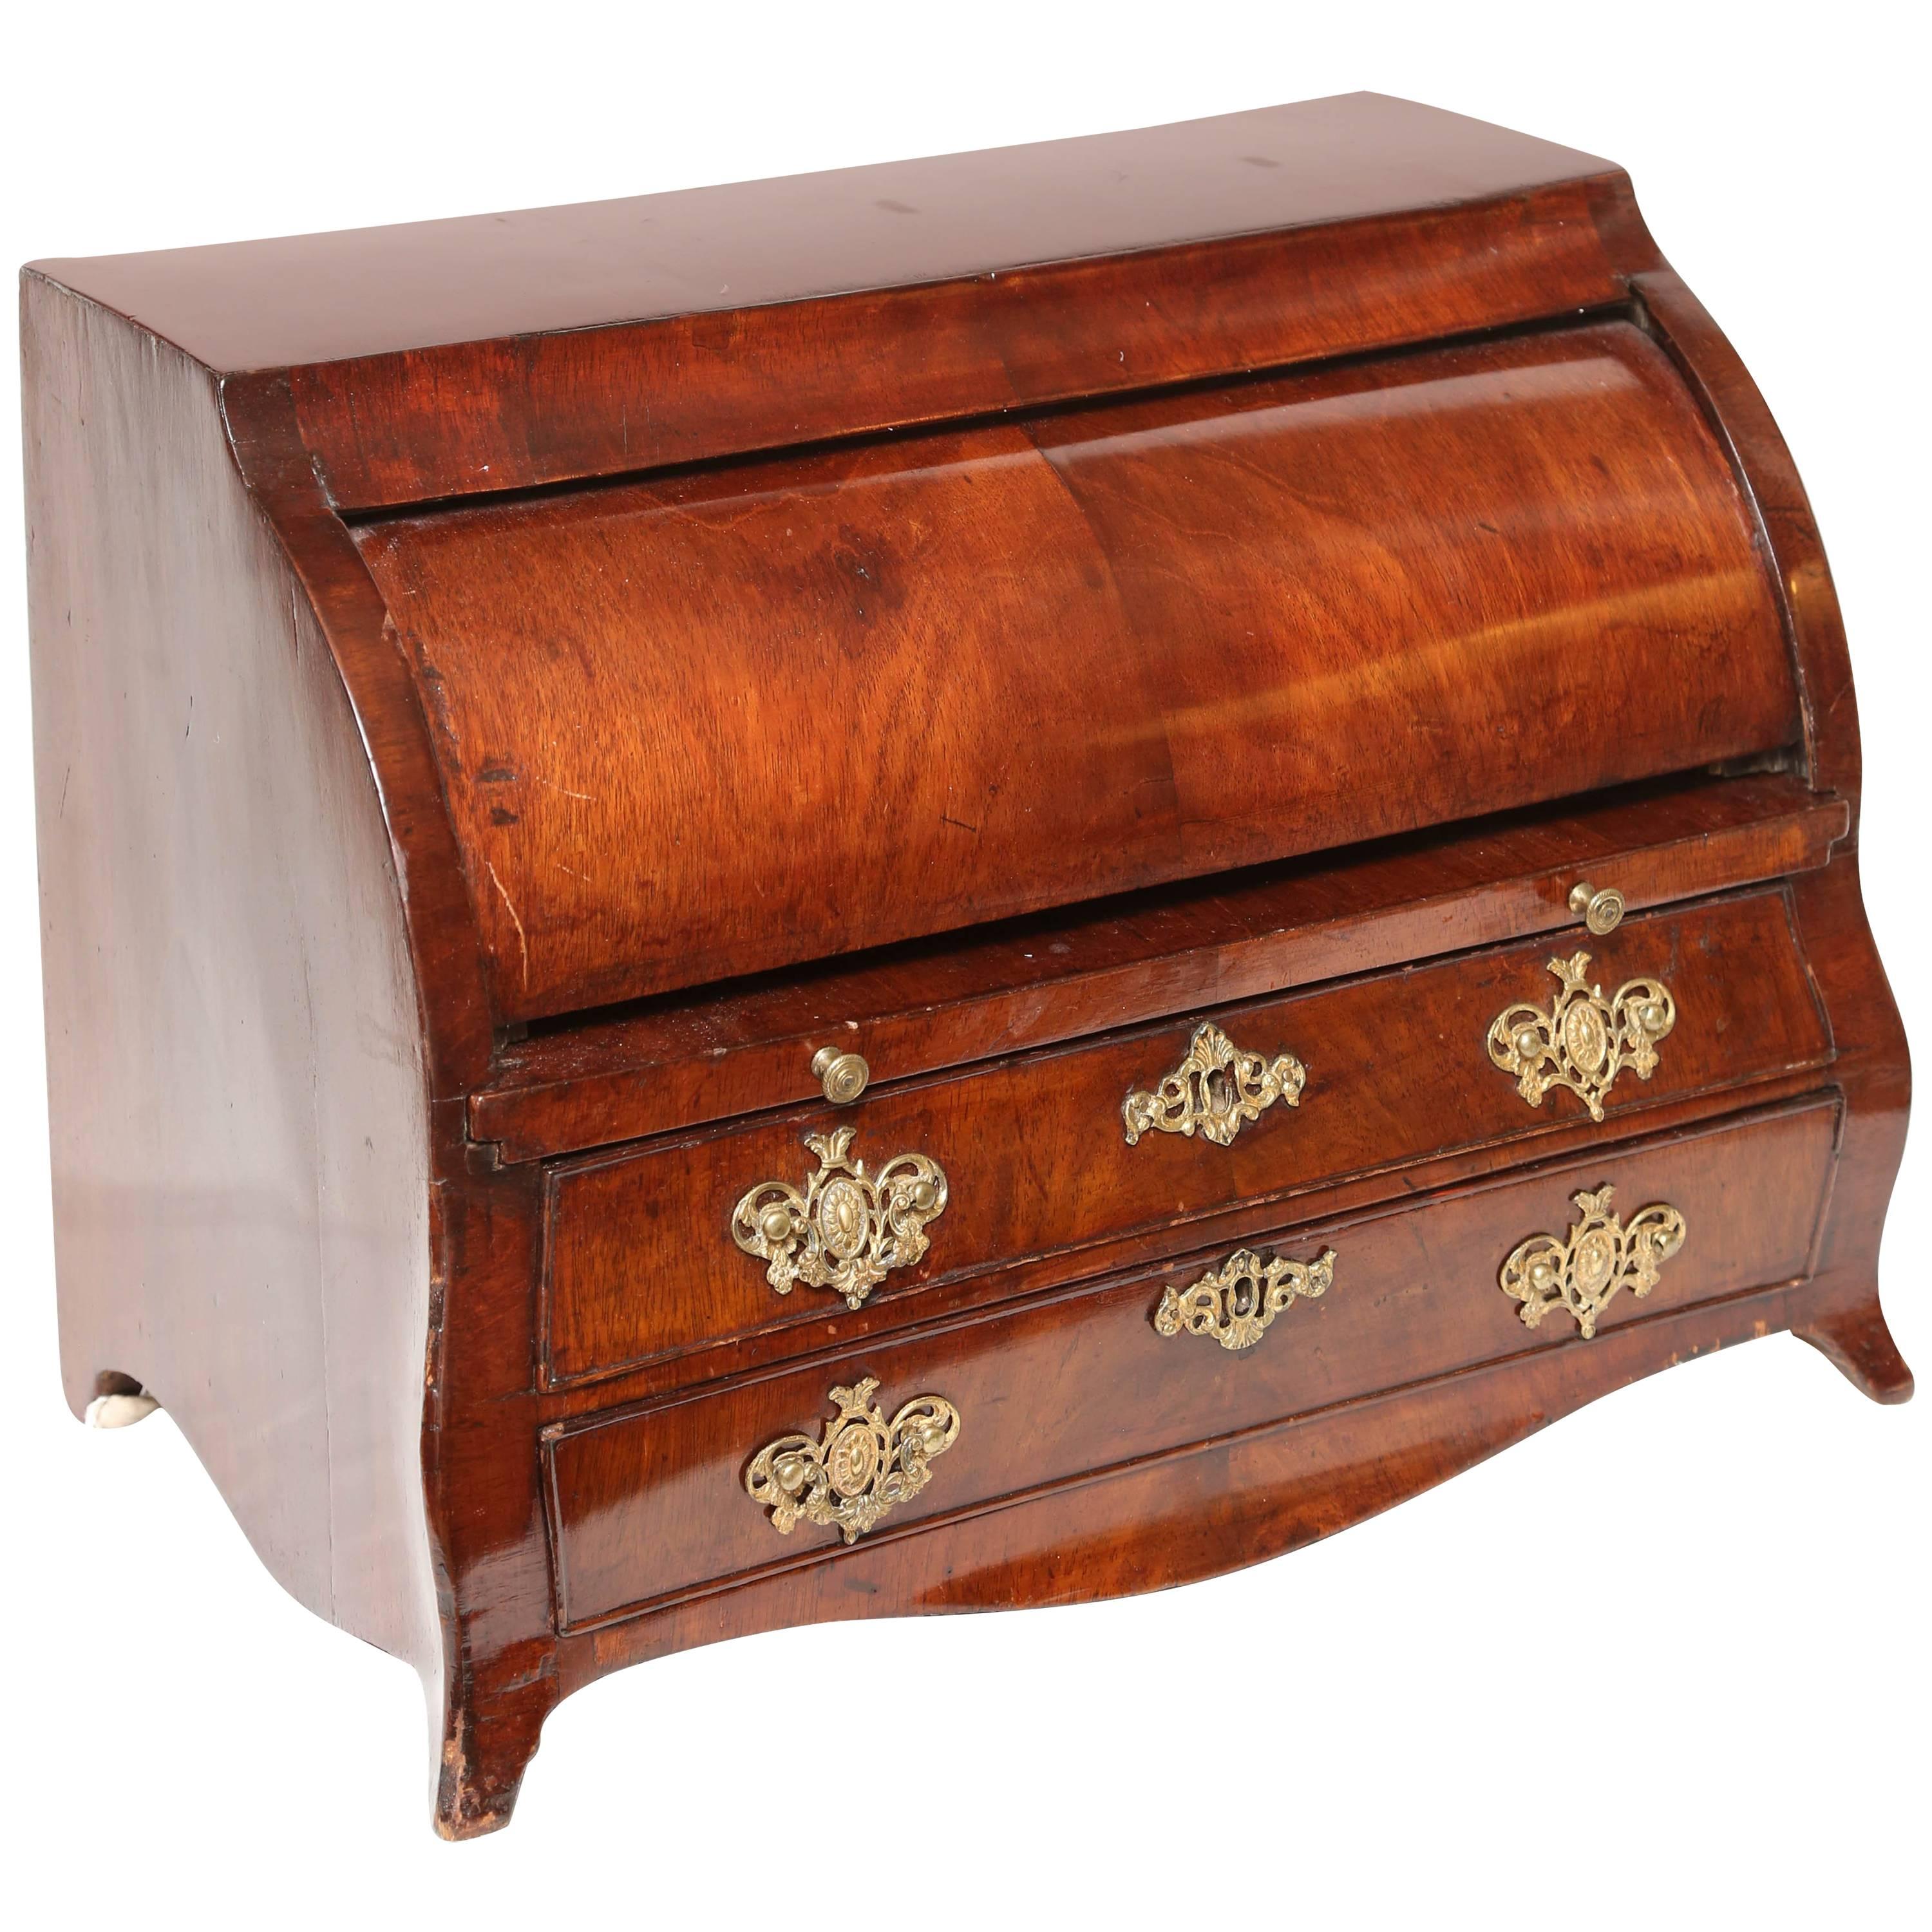 Superb 19th Century Continental Miniature Desk or Jewel Box